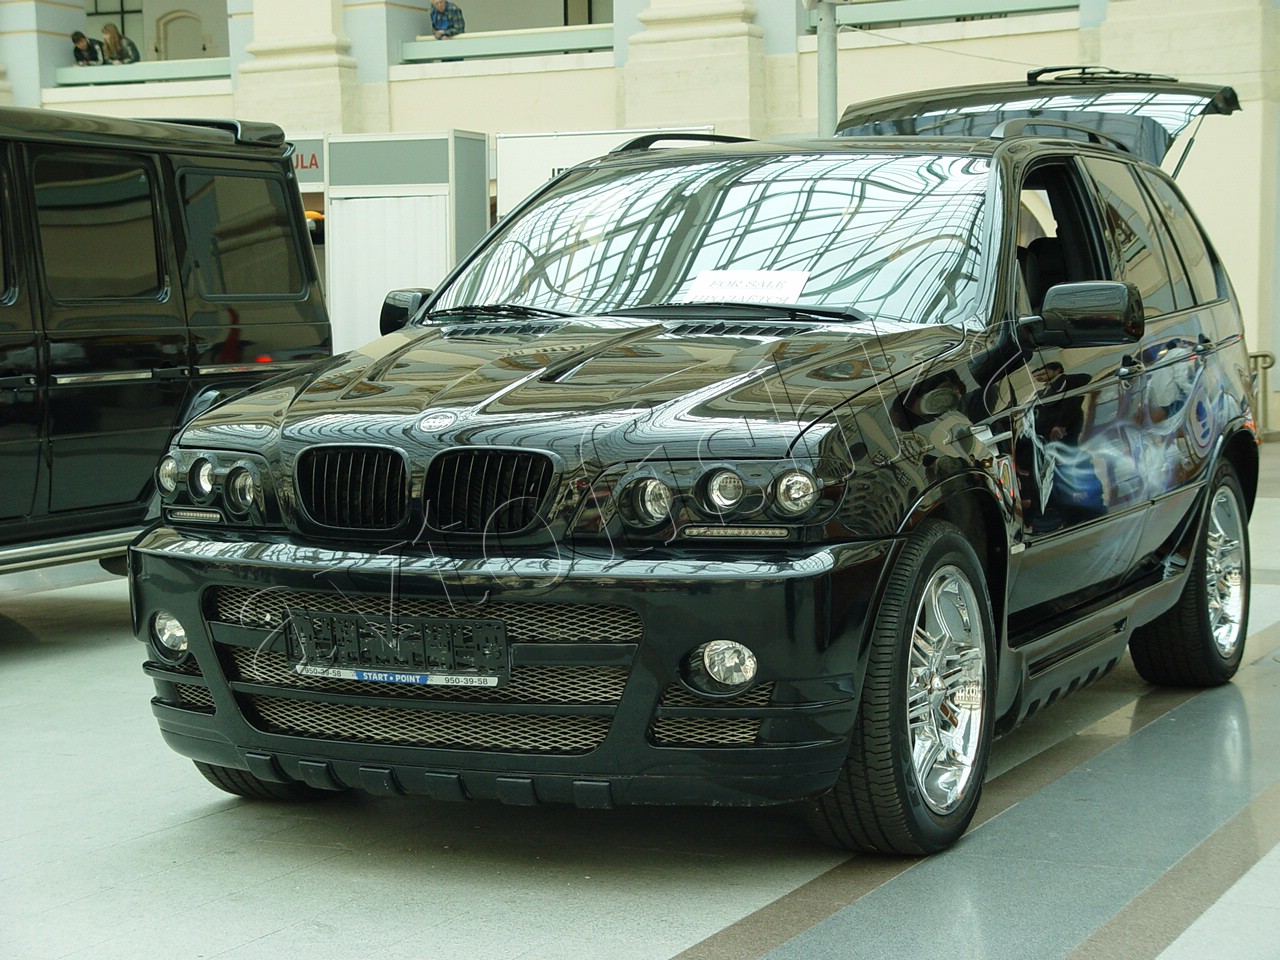   TARANTUL  BMW X5 E53 99-03    - 